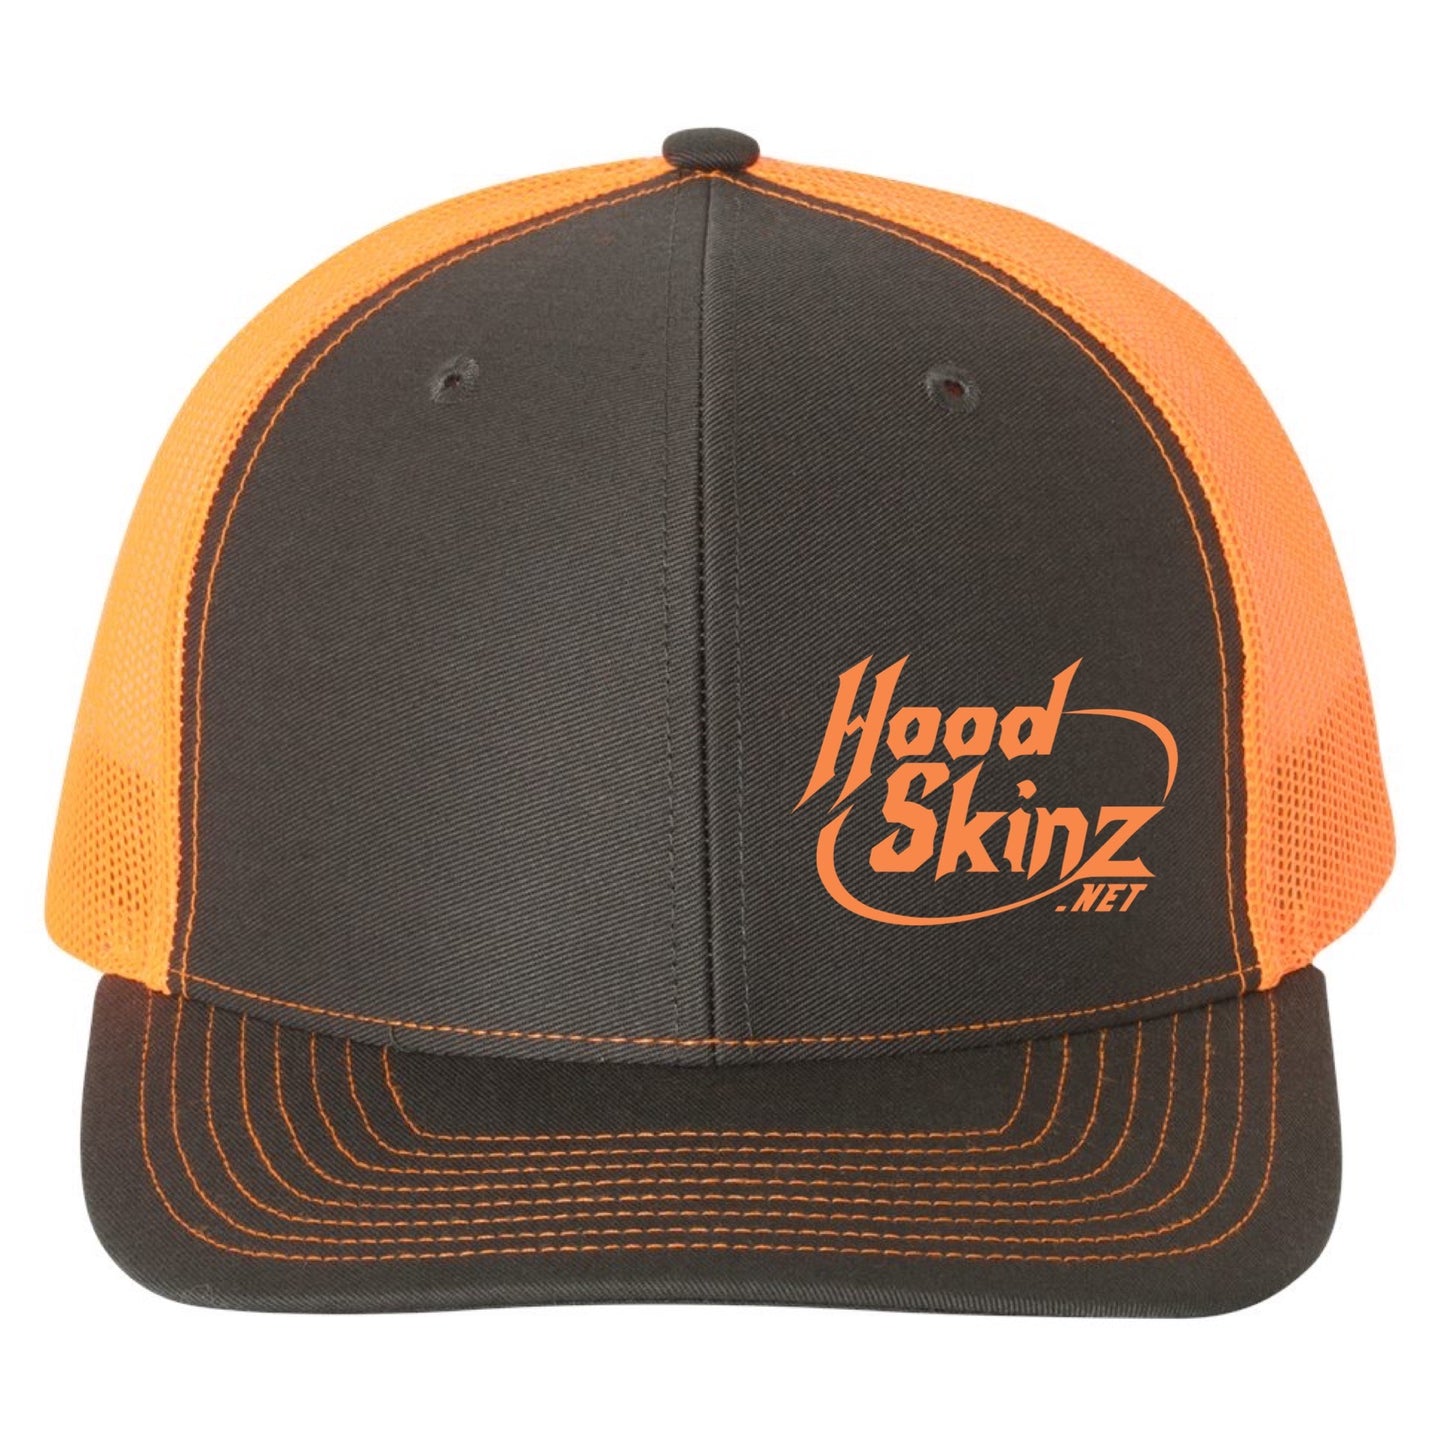 Hood Skinz Embroidered Richardson 112 Trucker Hat